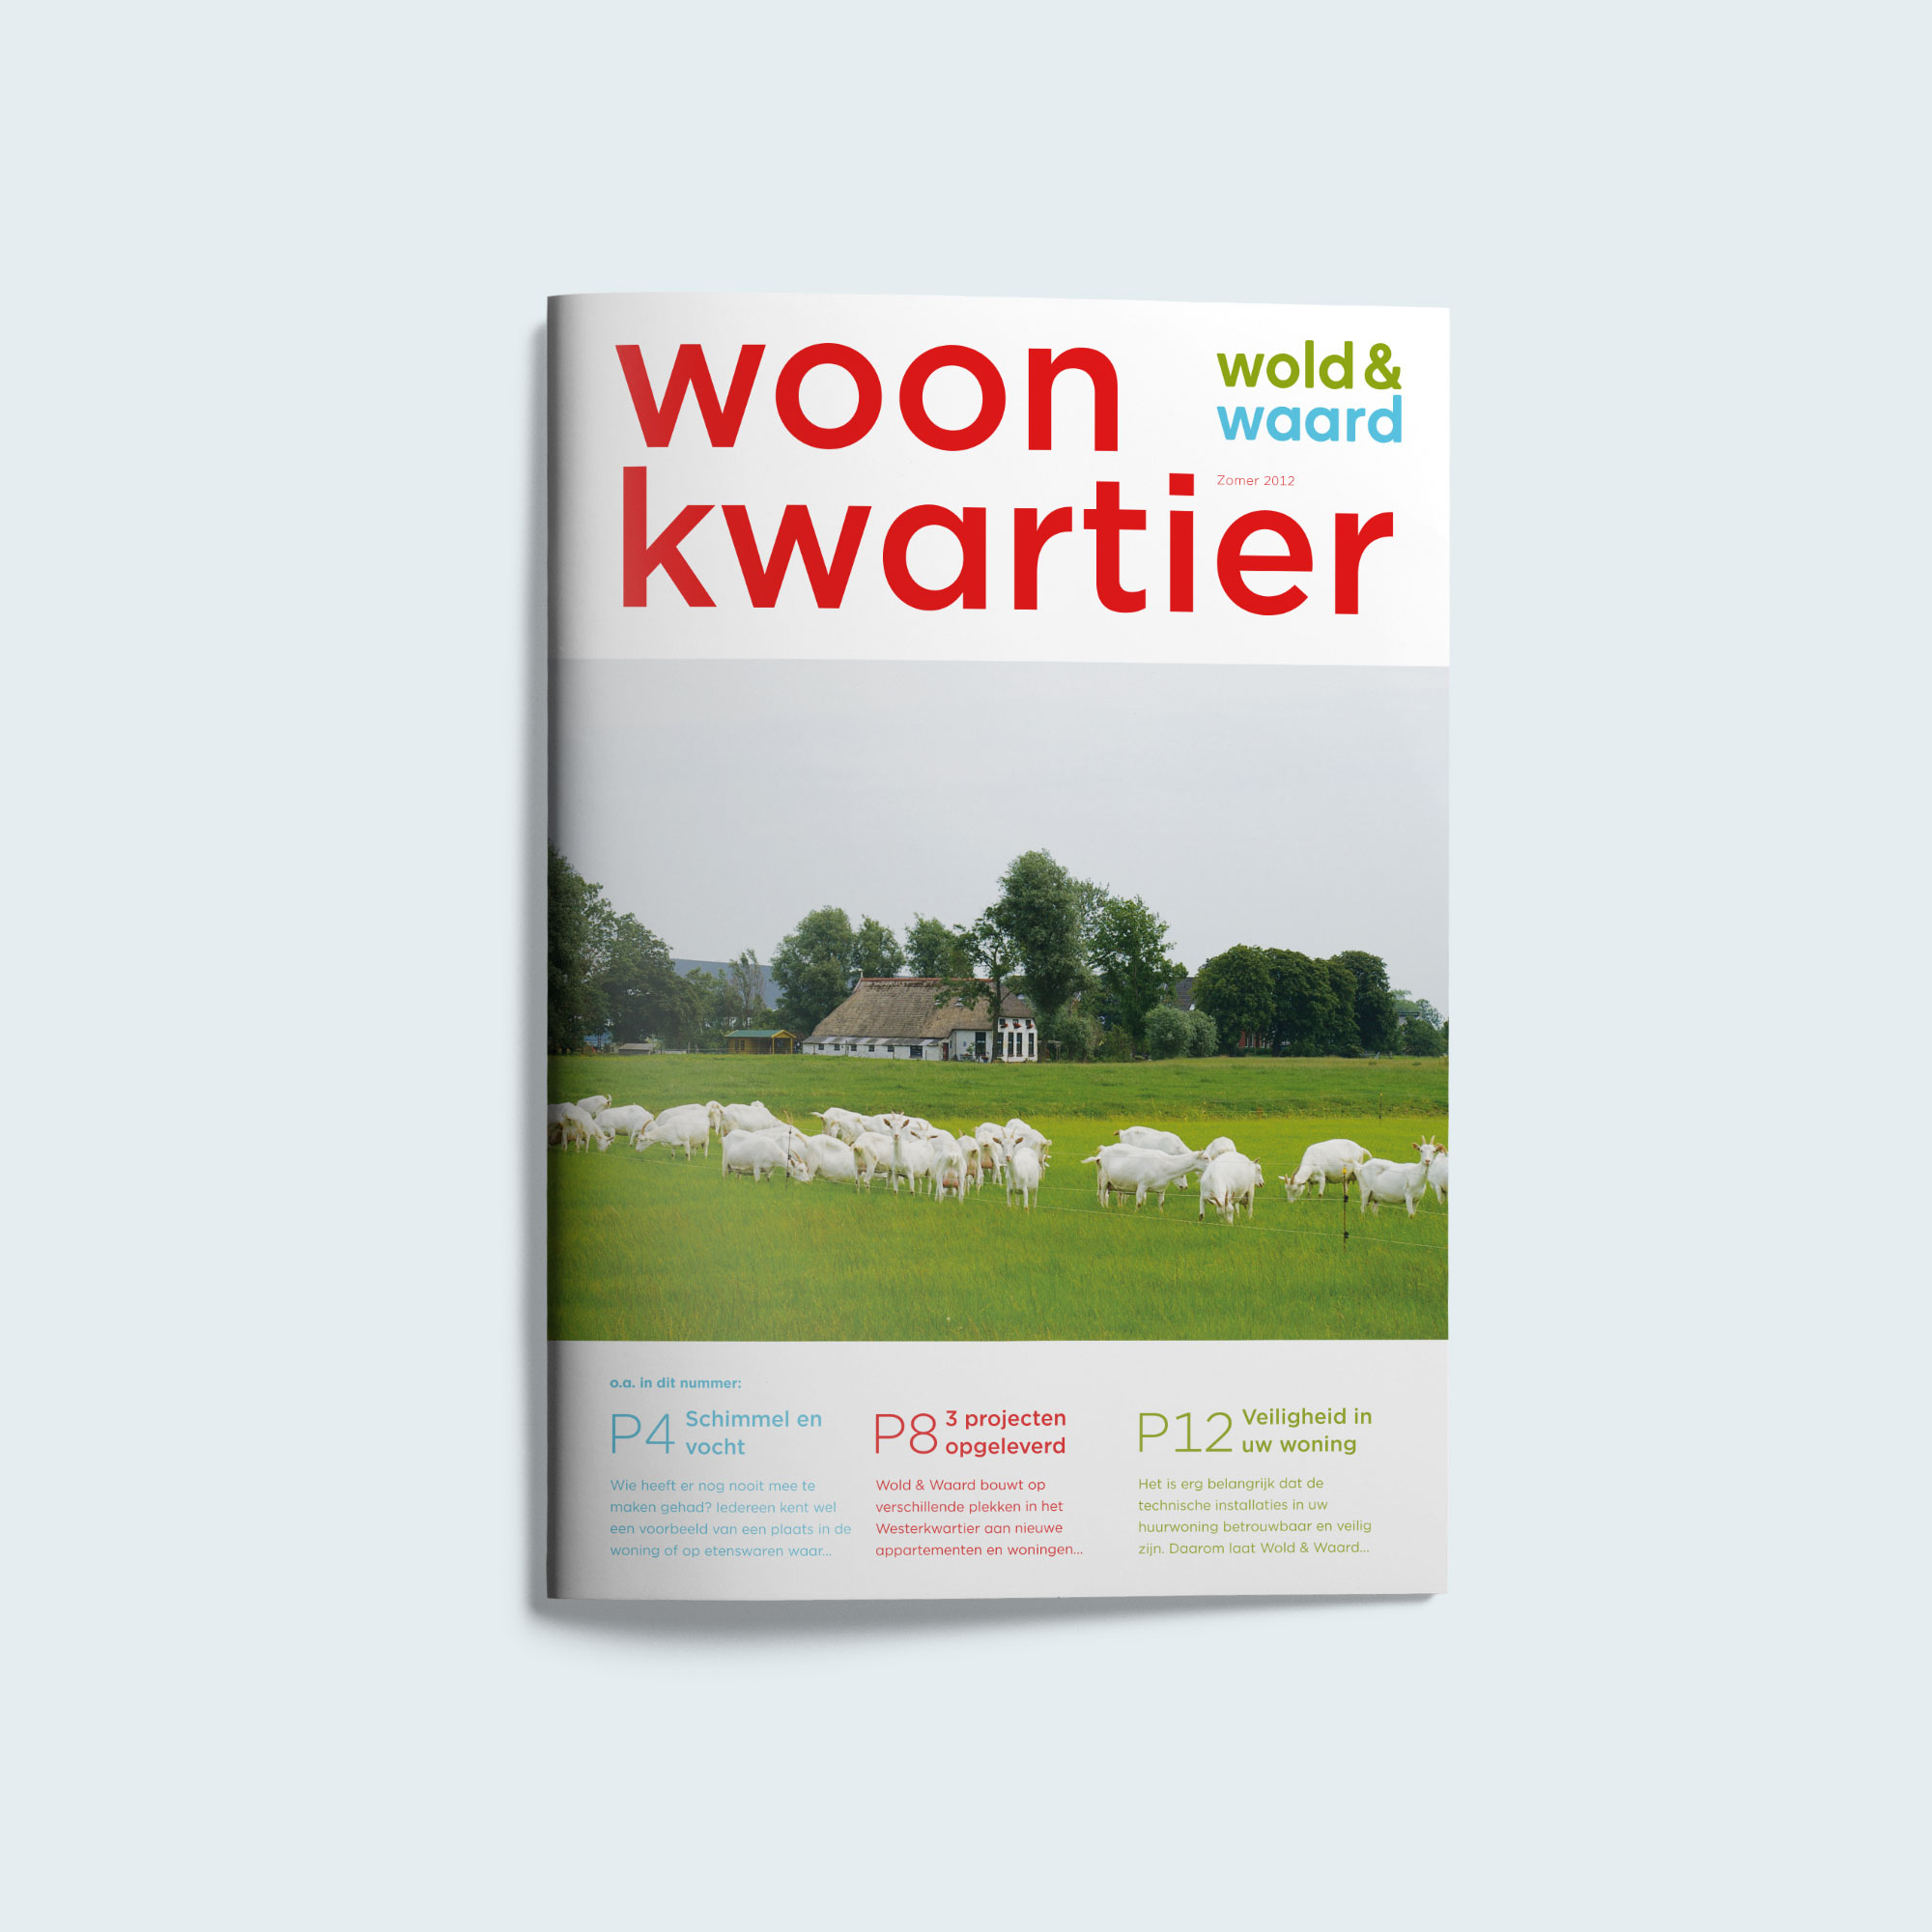 Wold & Waard magazine